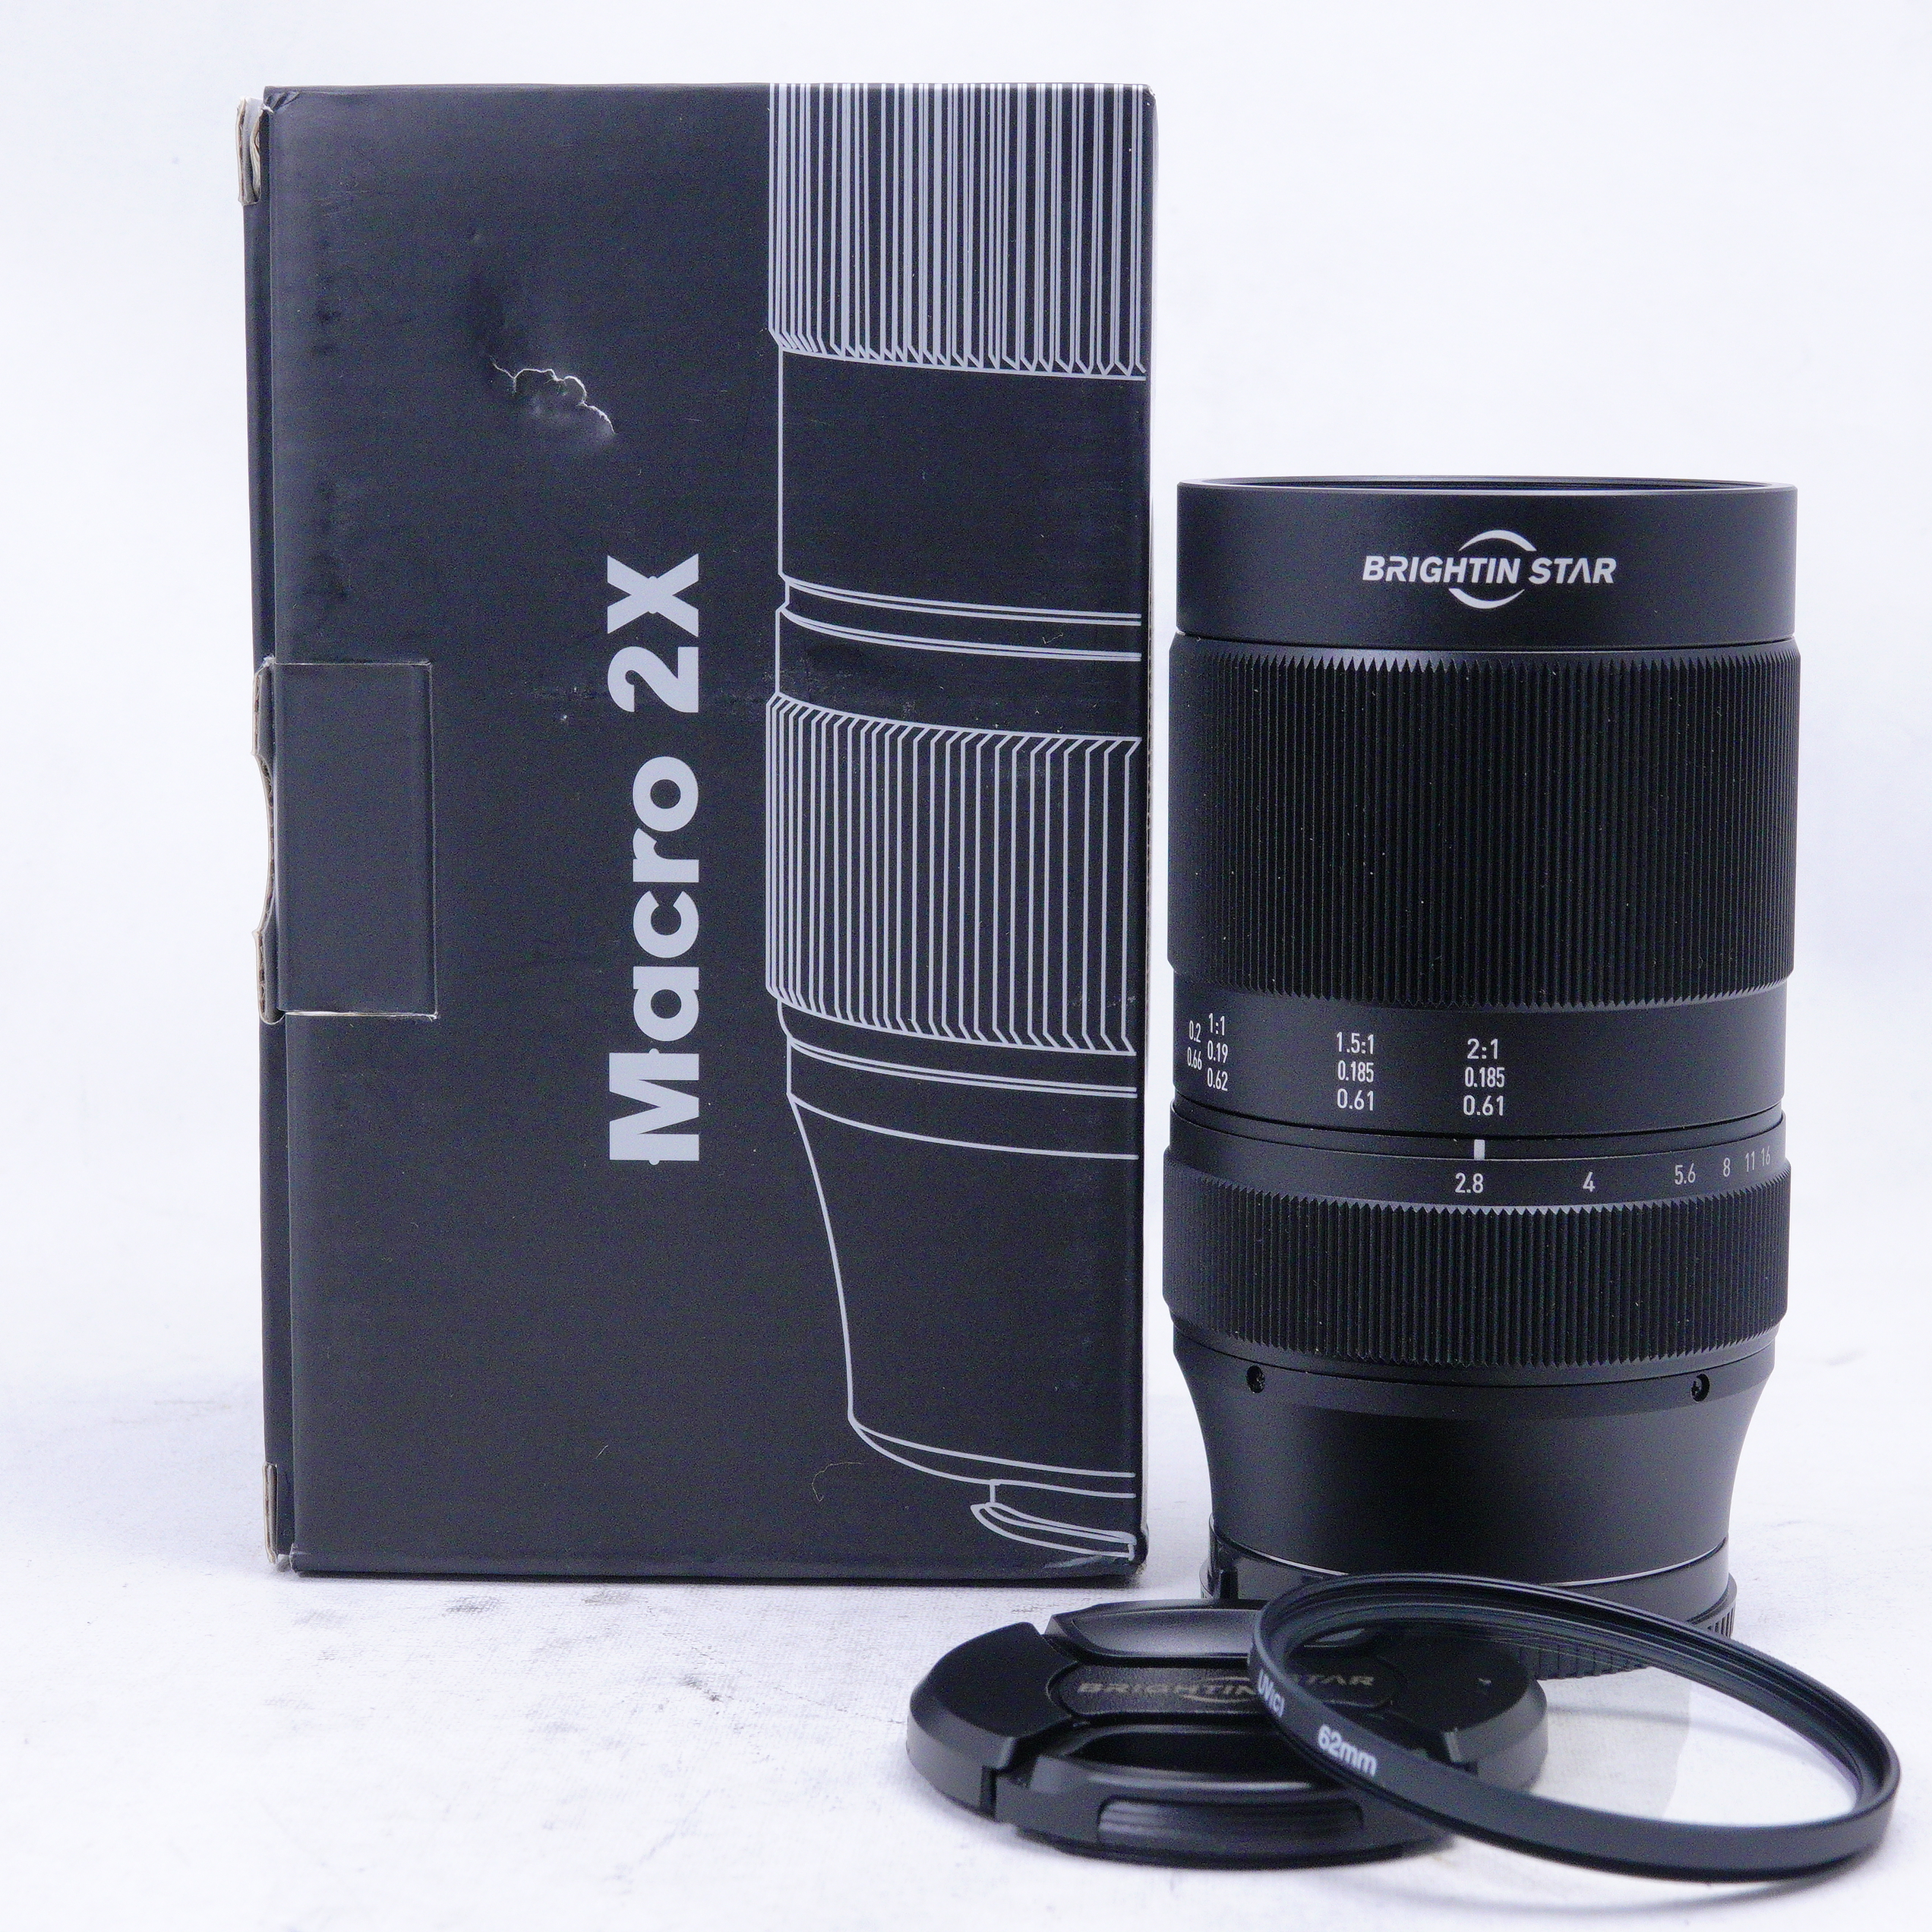 Brightin Star 60mm F2.8 2:1 doble magnificación Macro Lens - Usado